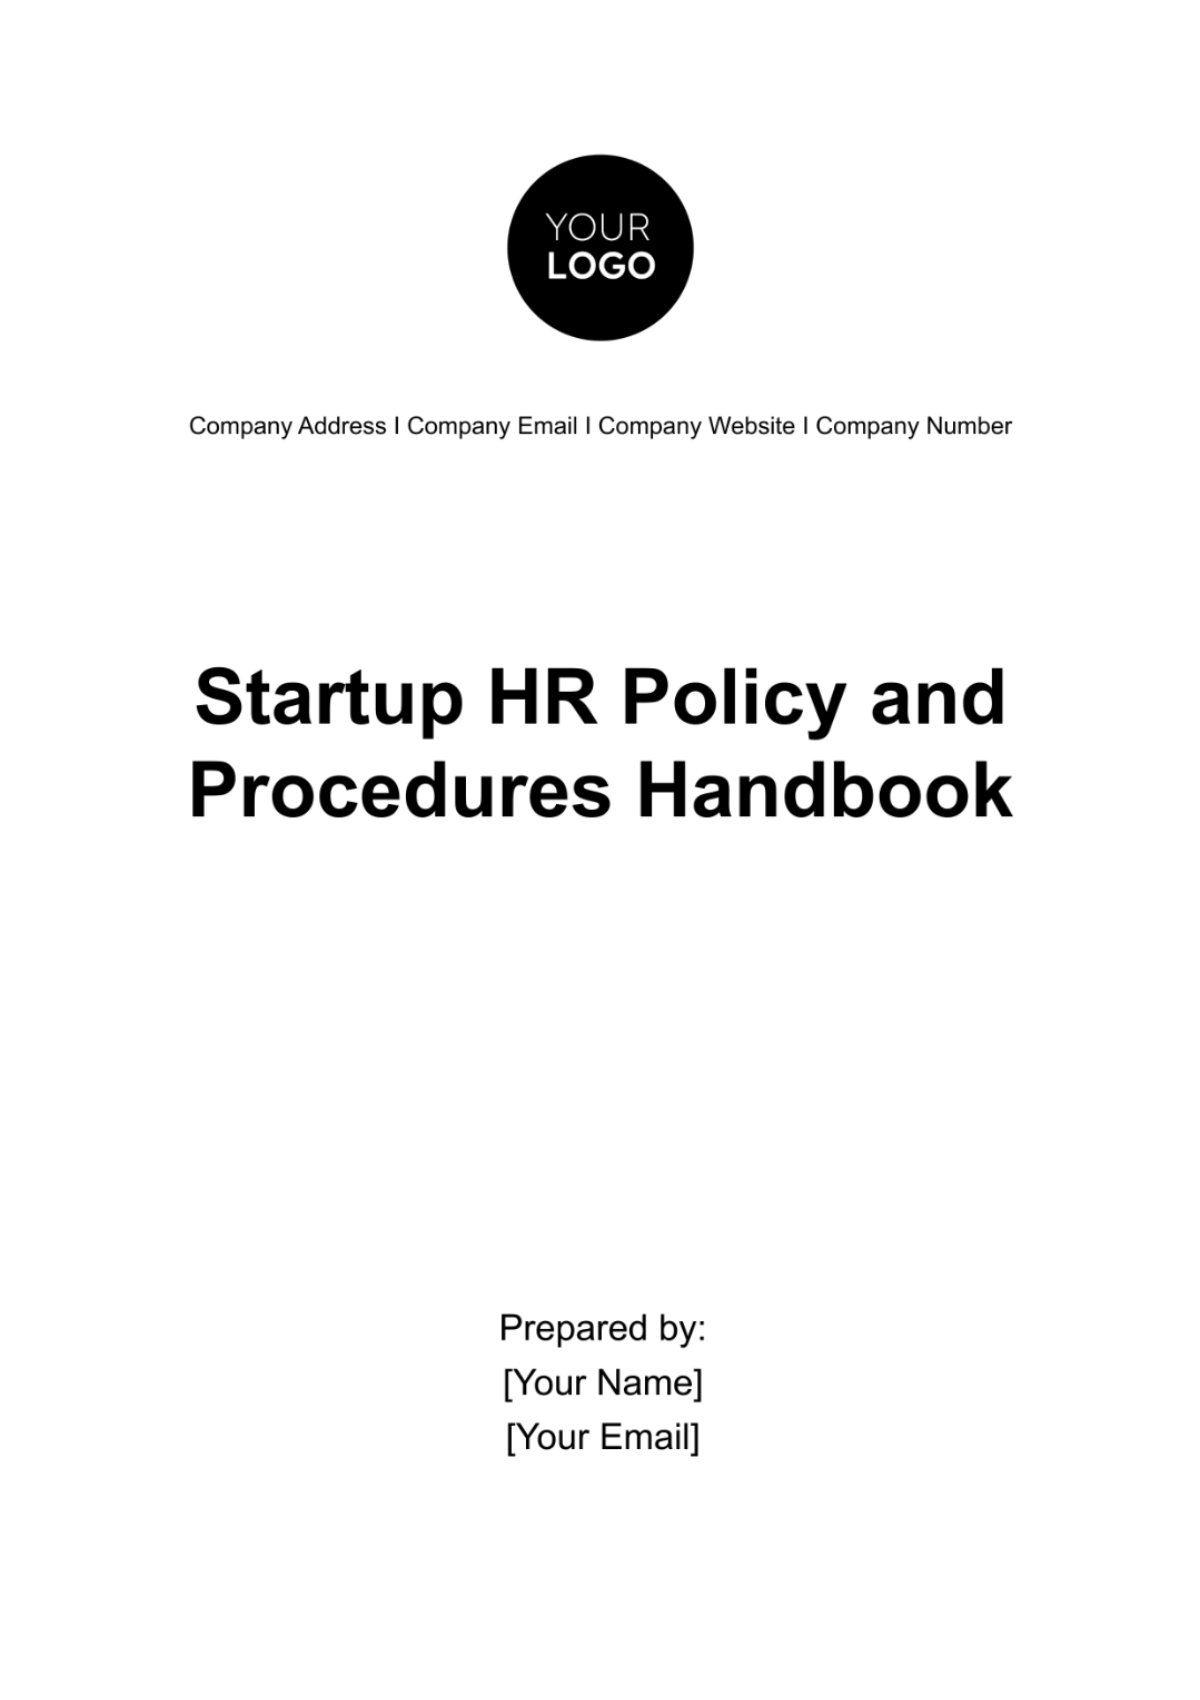 Startup HR Policy and Procedures Handbook Template